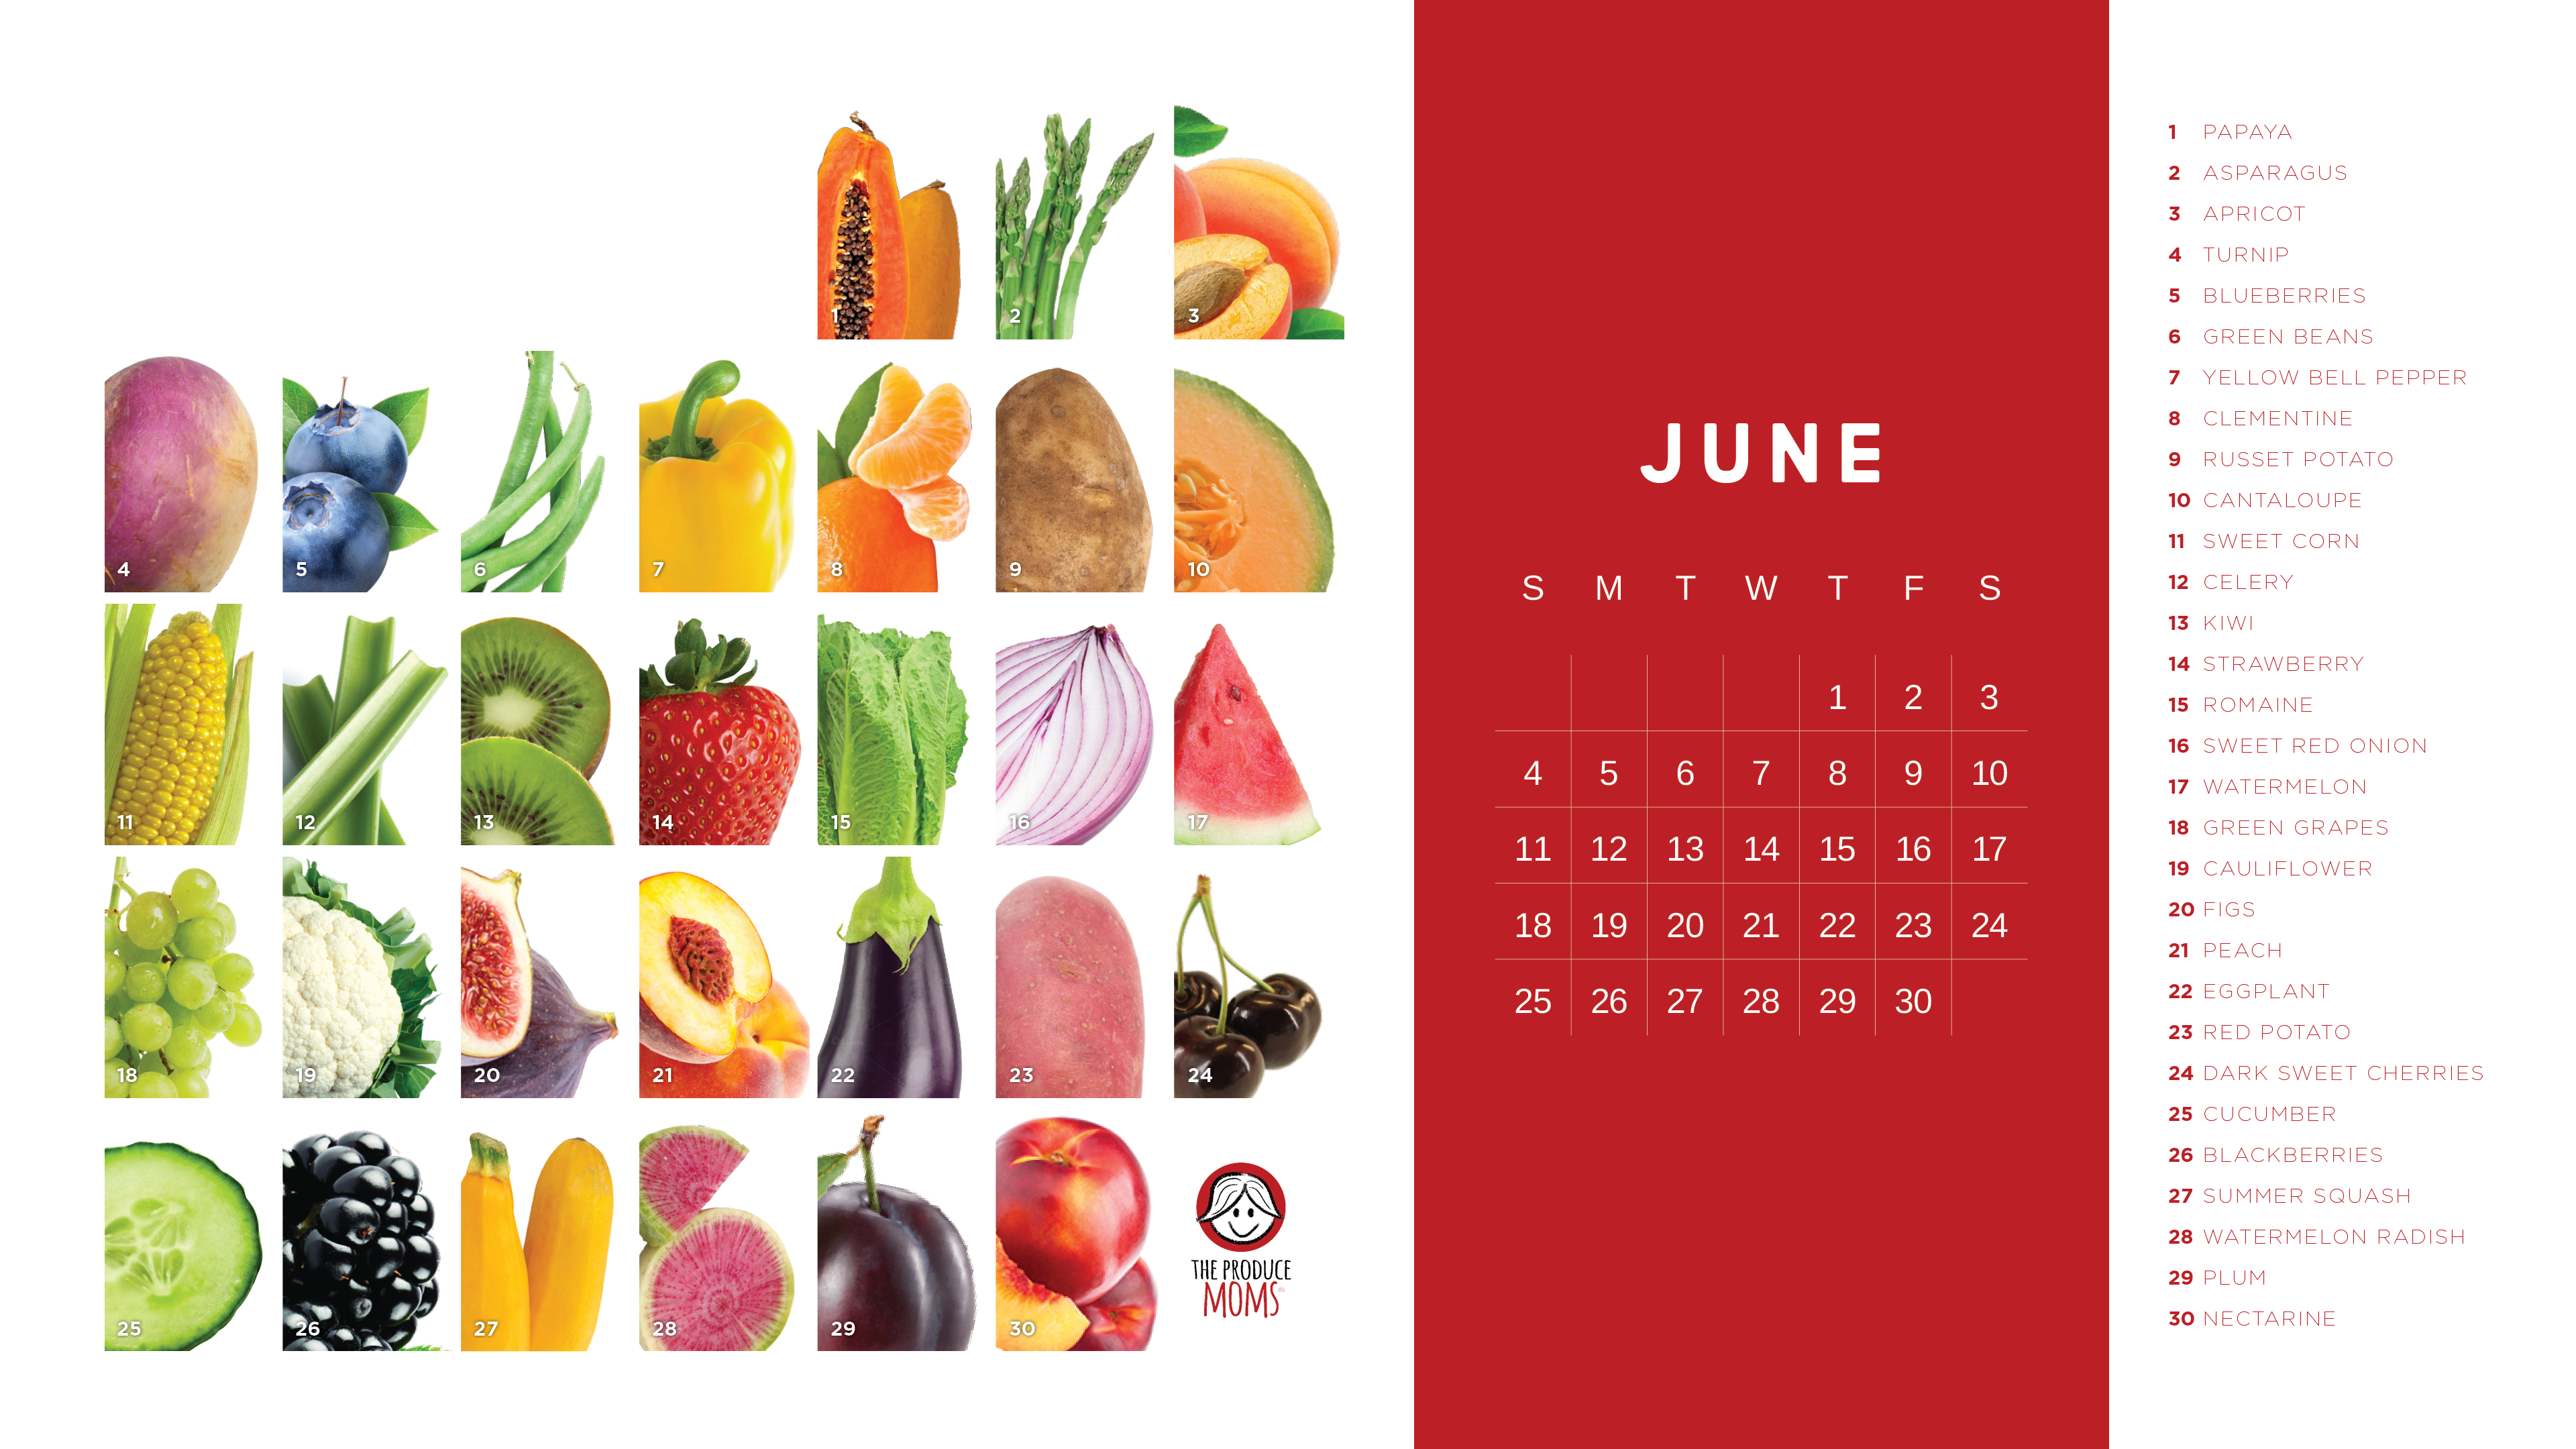 June Produce Challenge Image